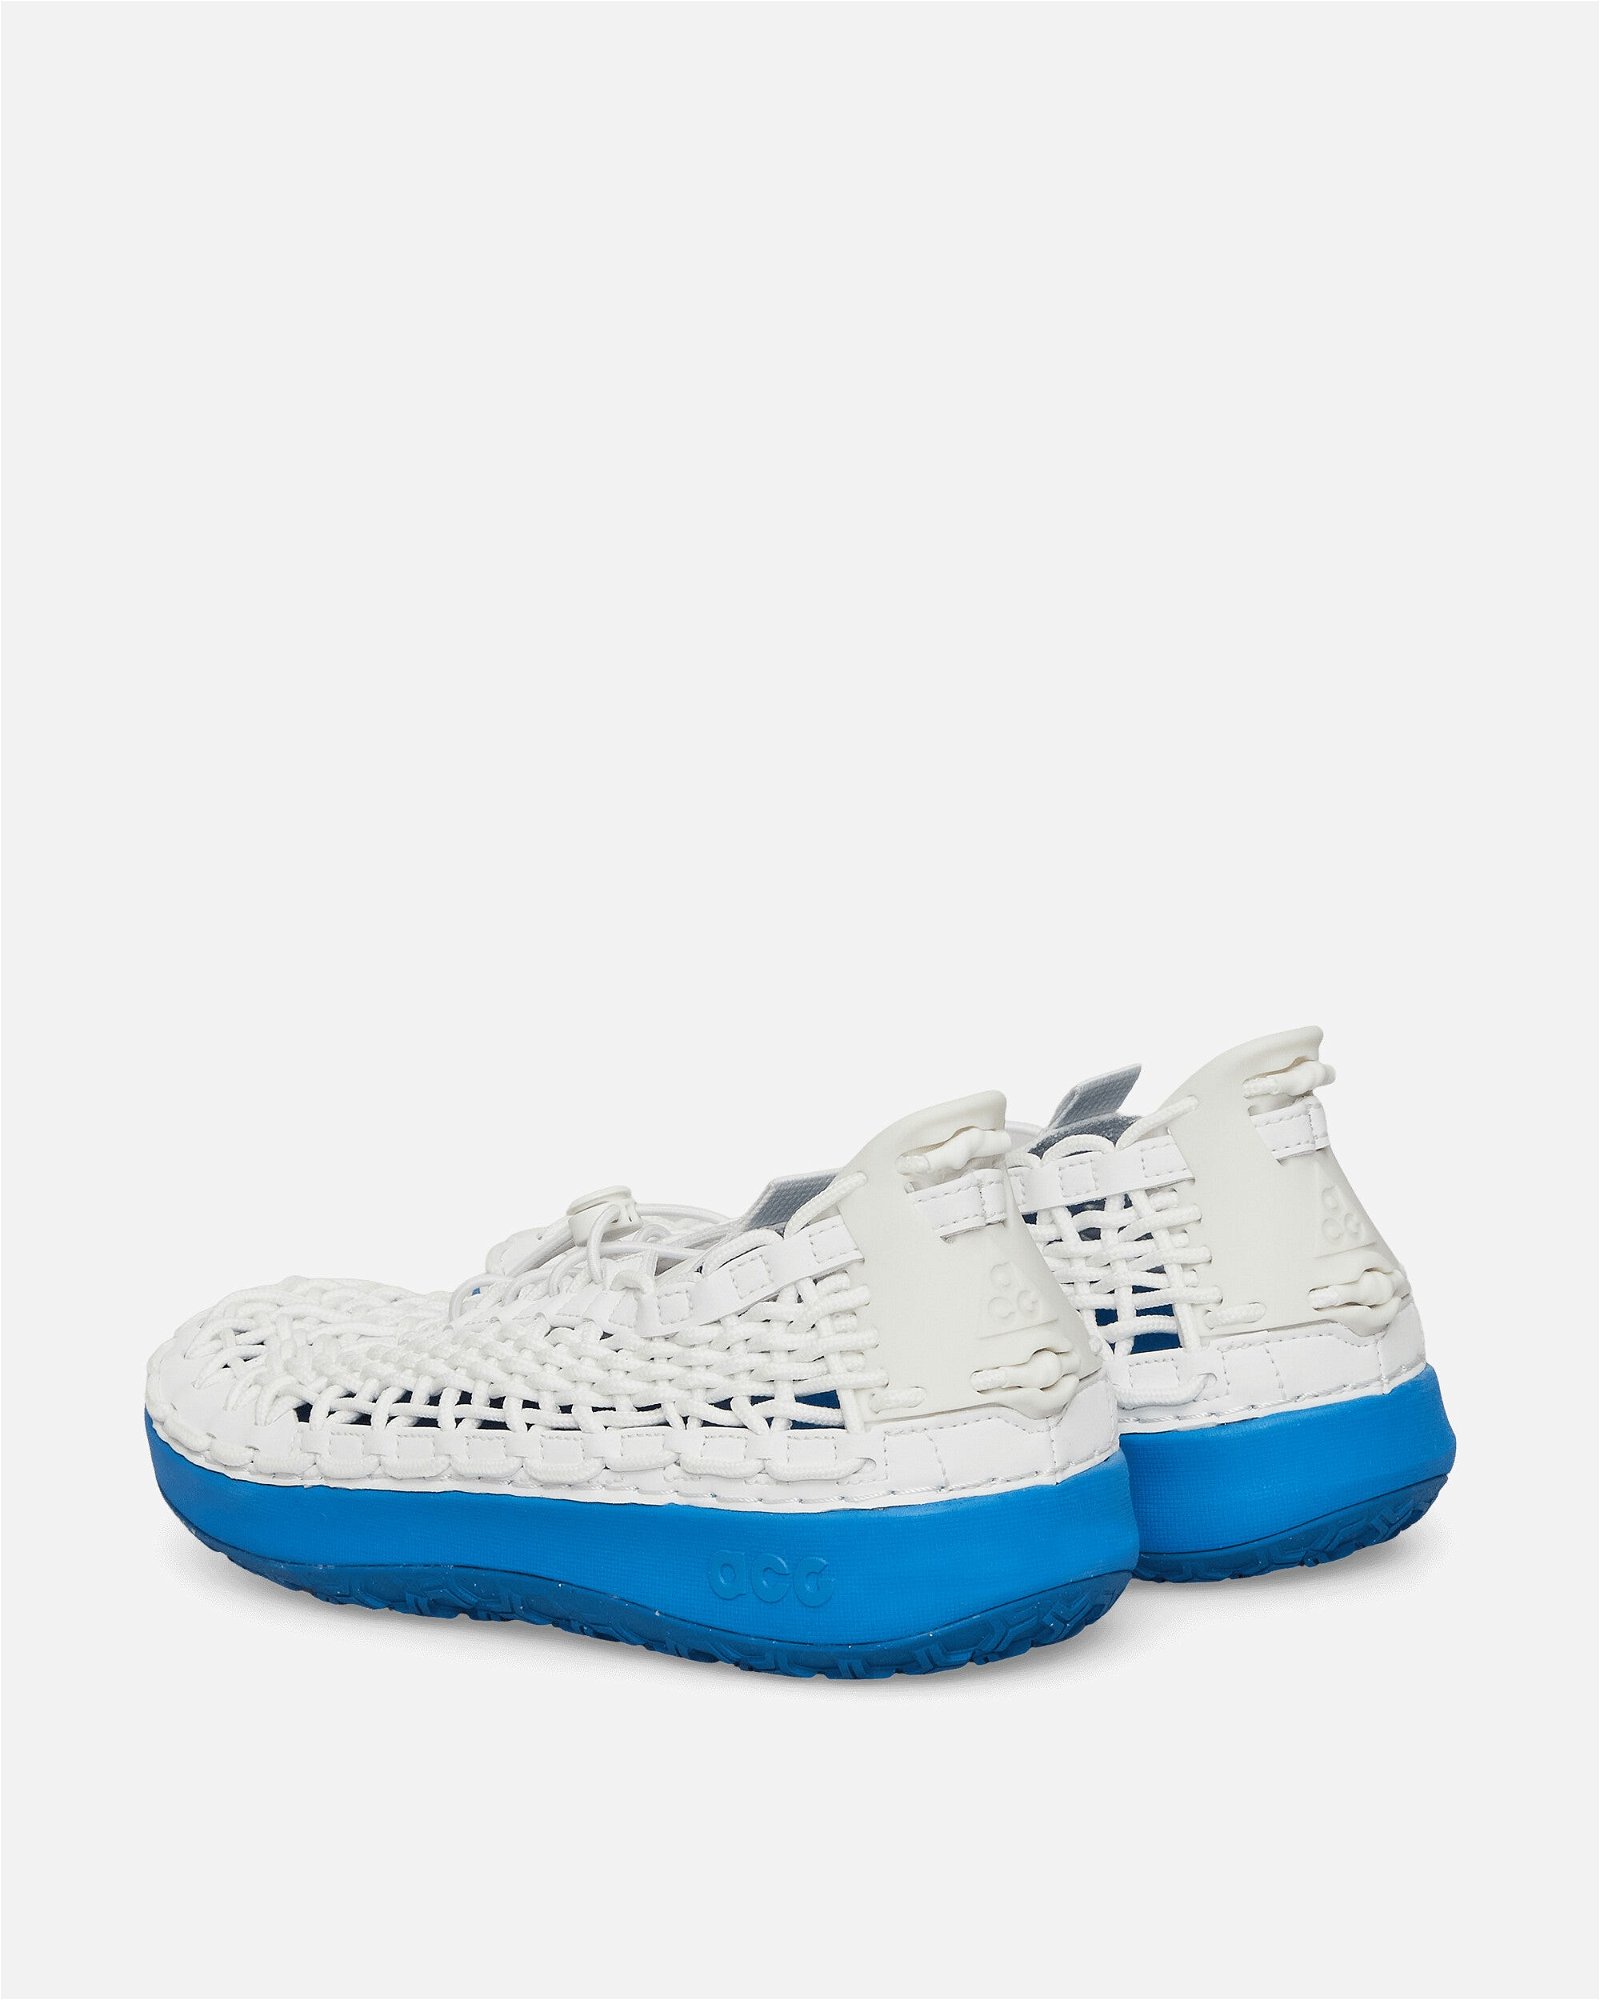 ACG Watercat+ Sneakers Summit White / Light Photo Blue